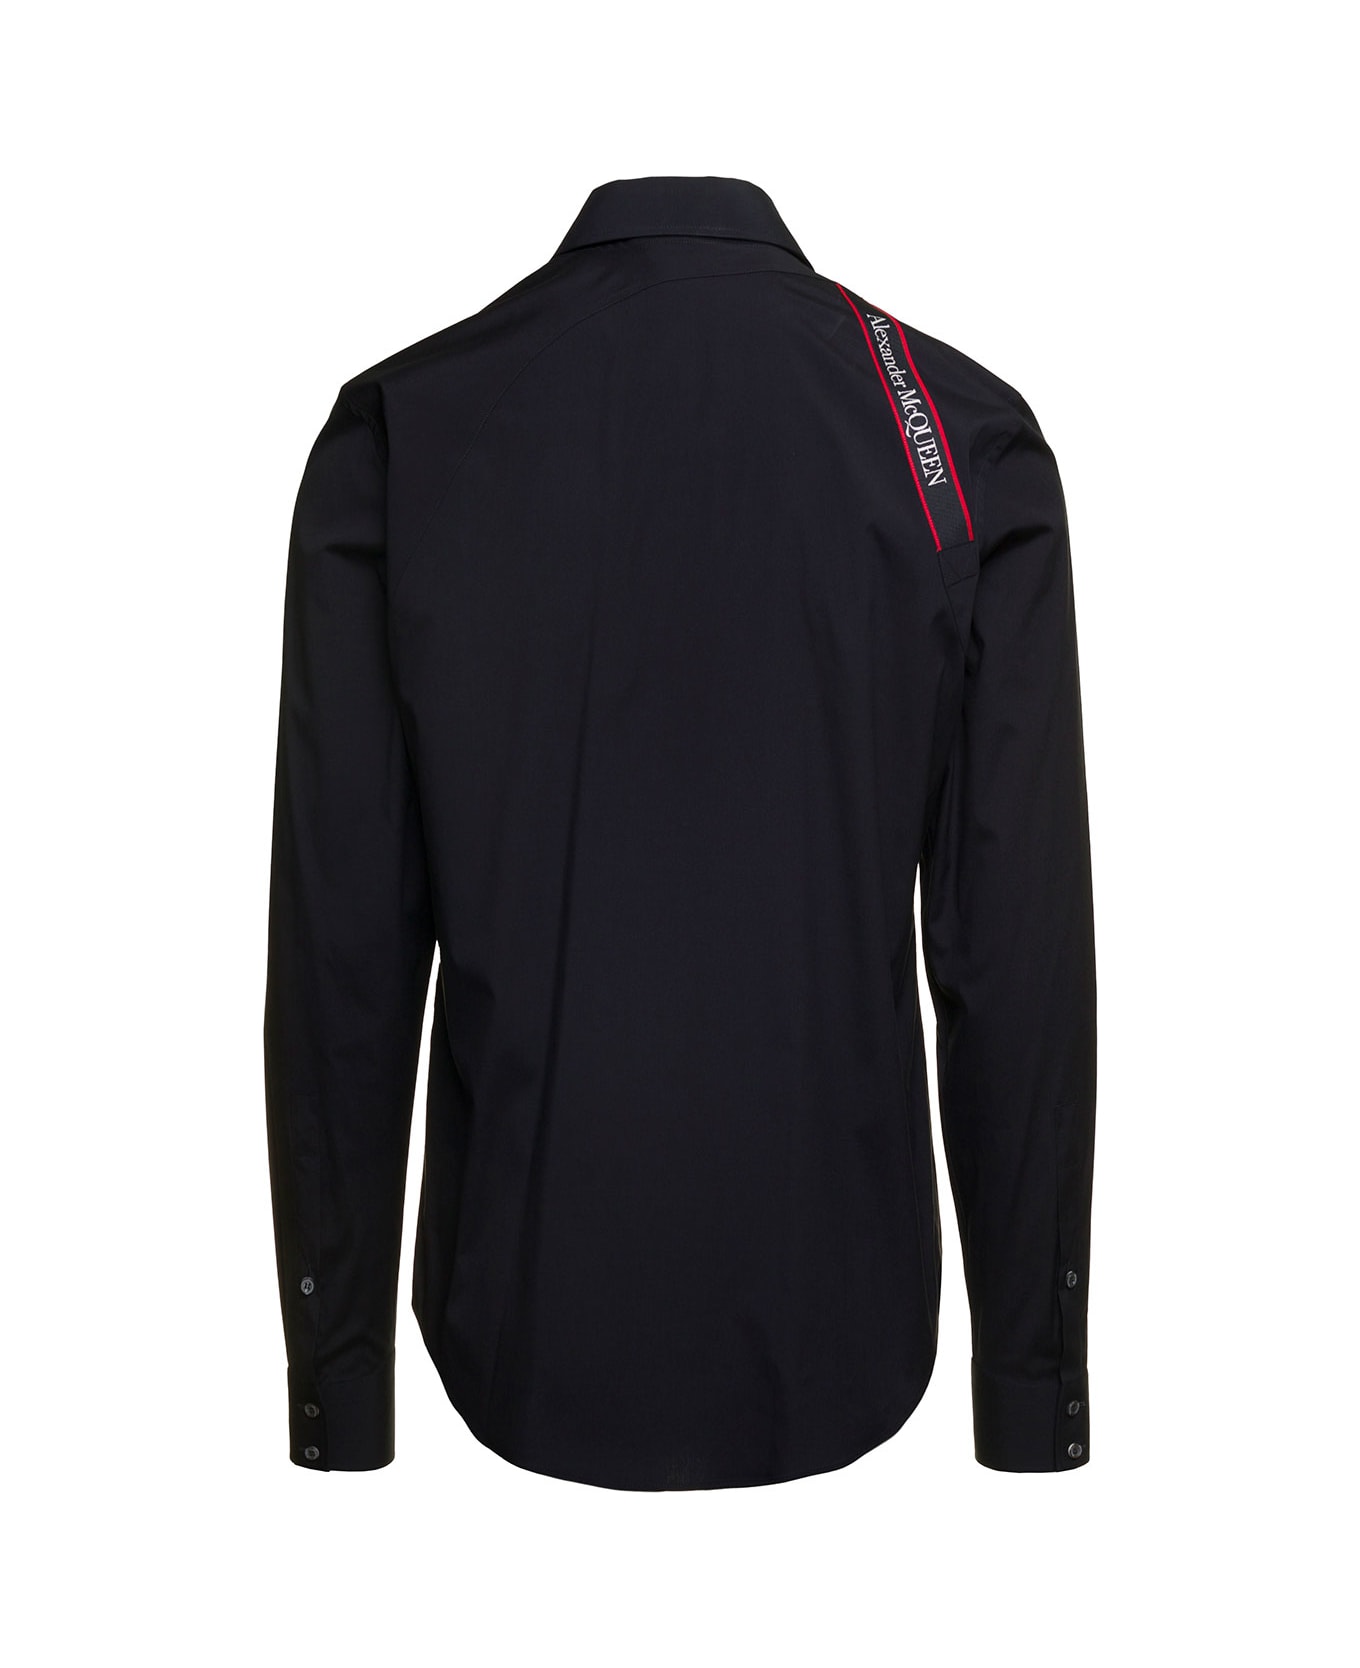 Alexander McQueen Shirt With Harness Detail - Black